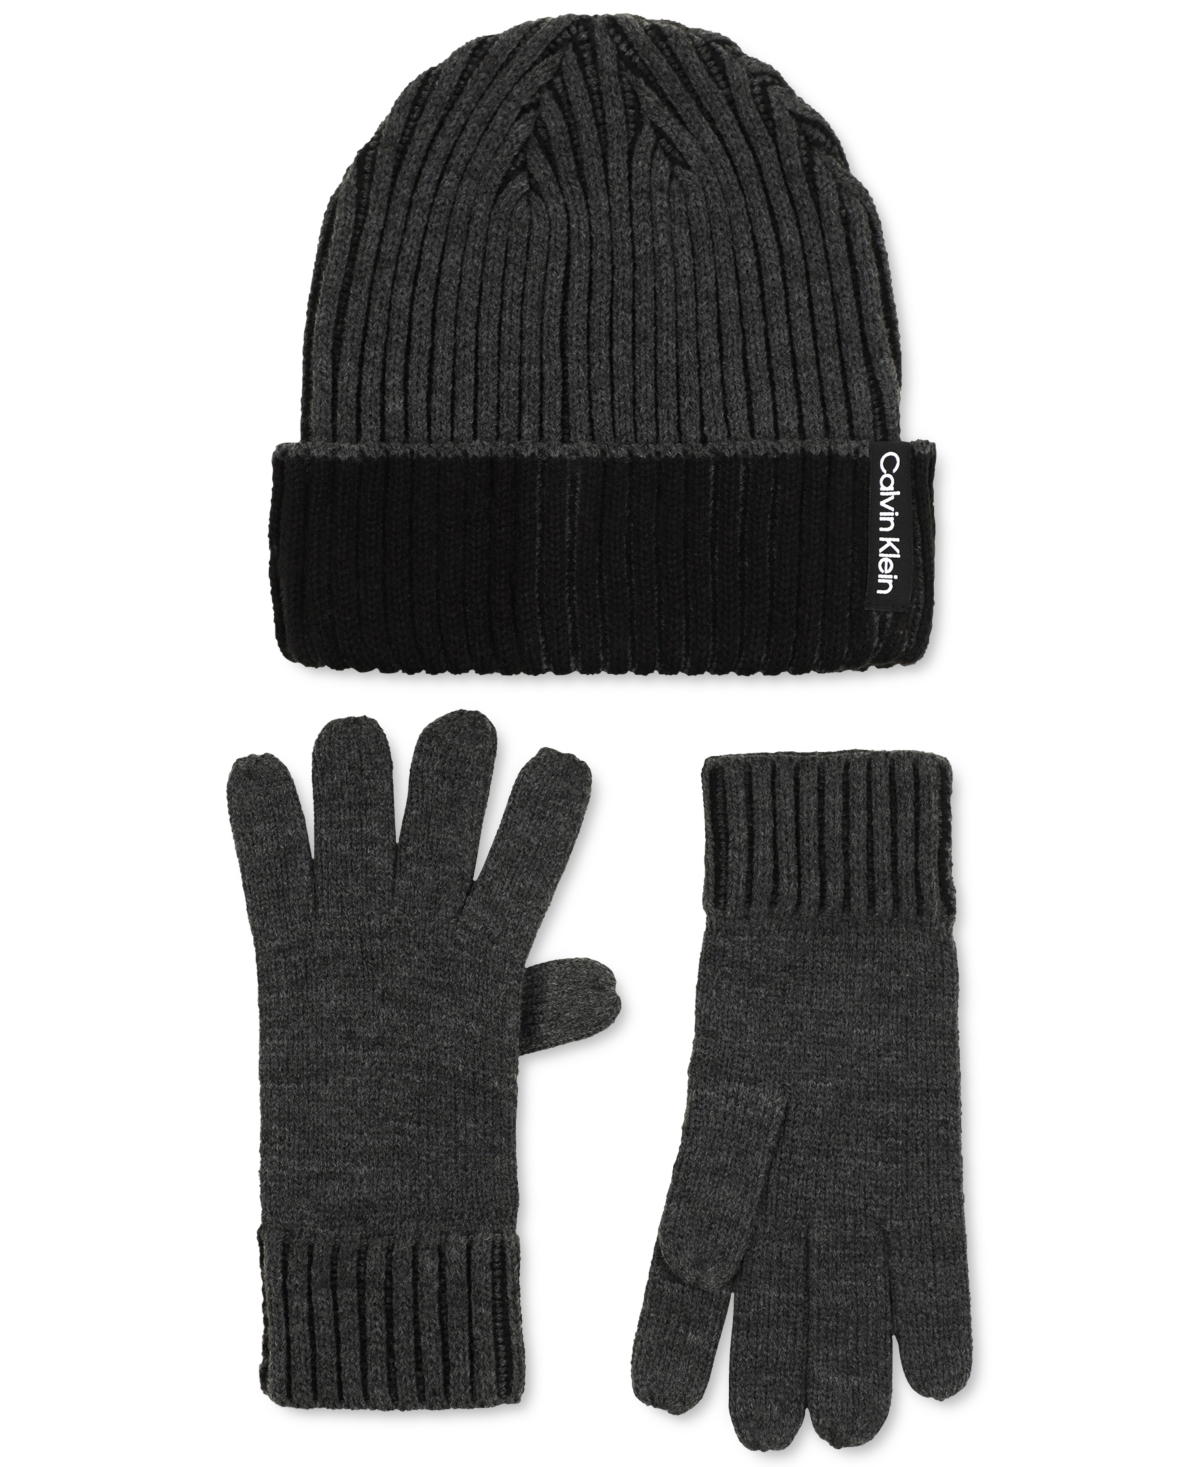 Men's Double-Wide Ribbed Fisherman's Hat & Gloves Set - Gunmetal Heather